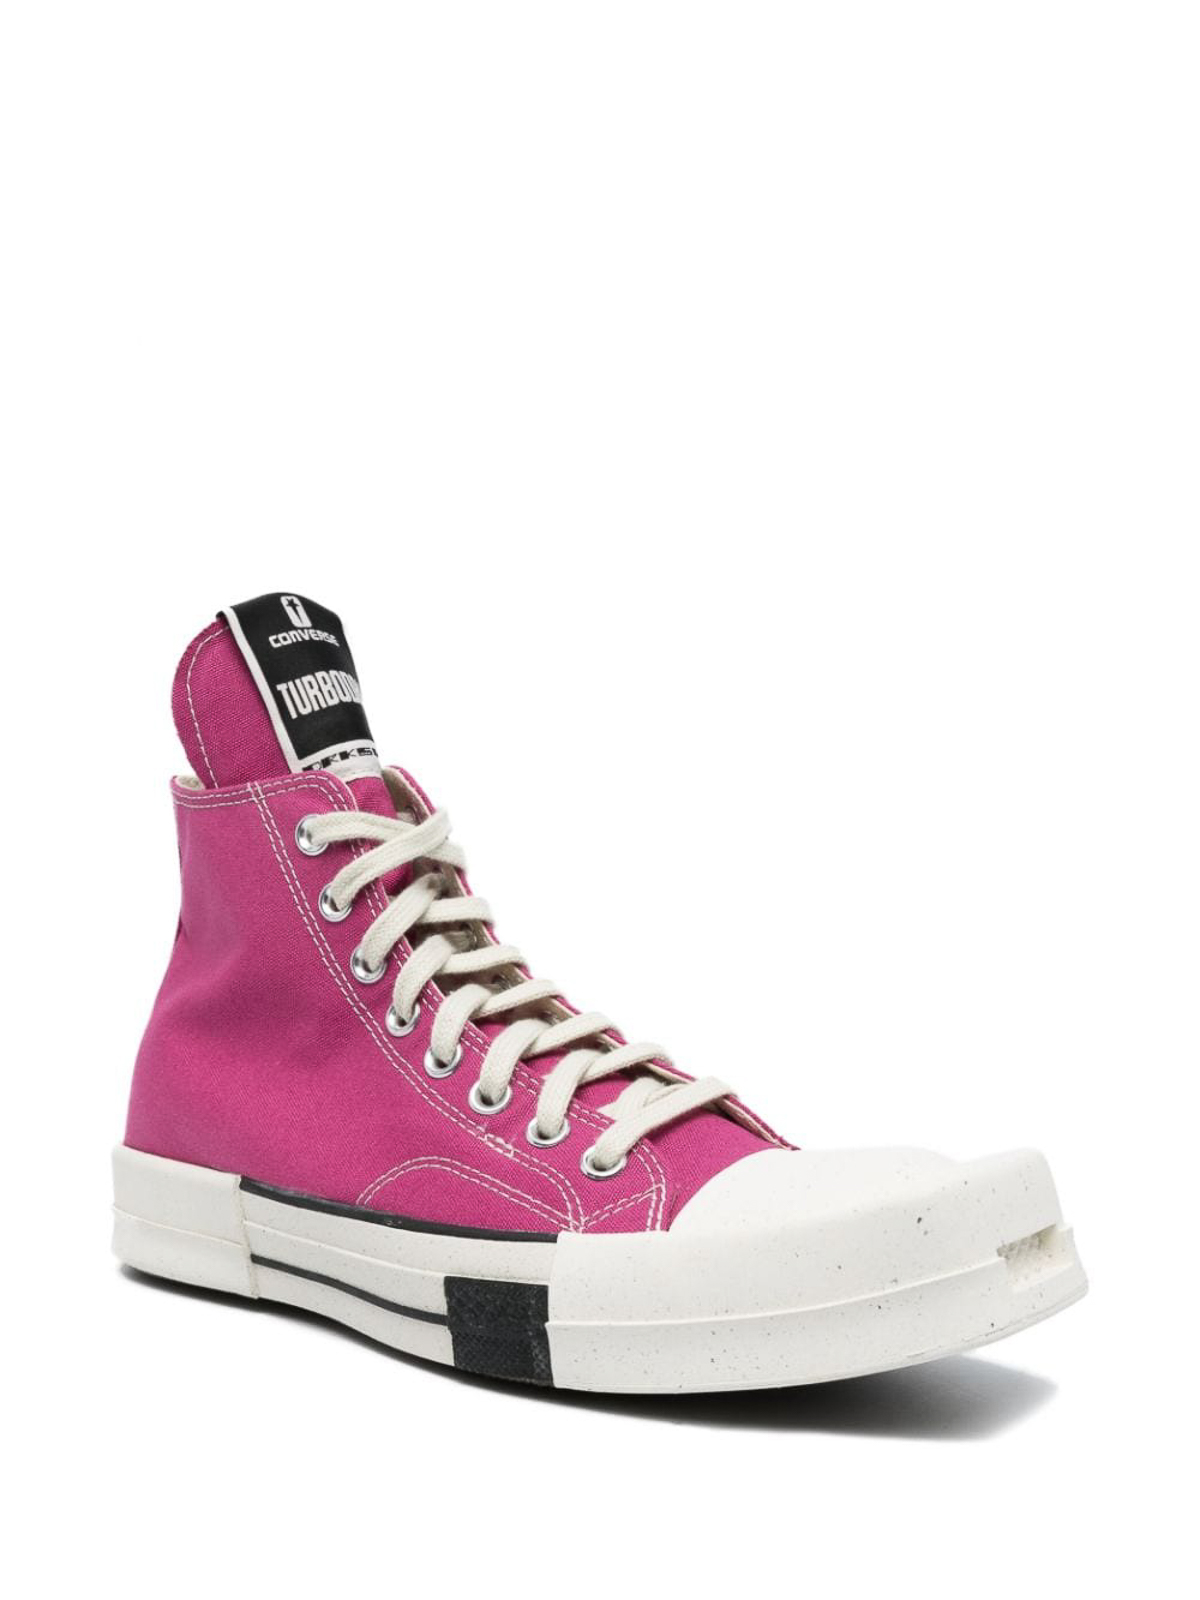 Shop Converse X Drkshwd Flat Shoes Pink